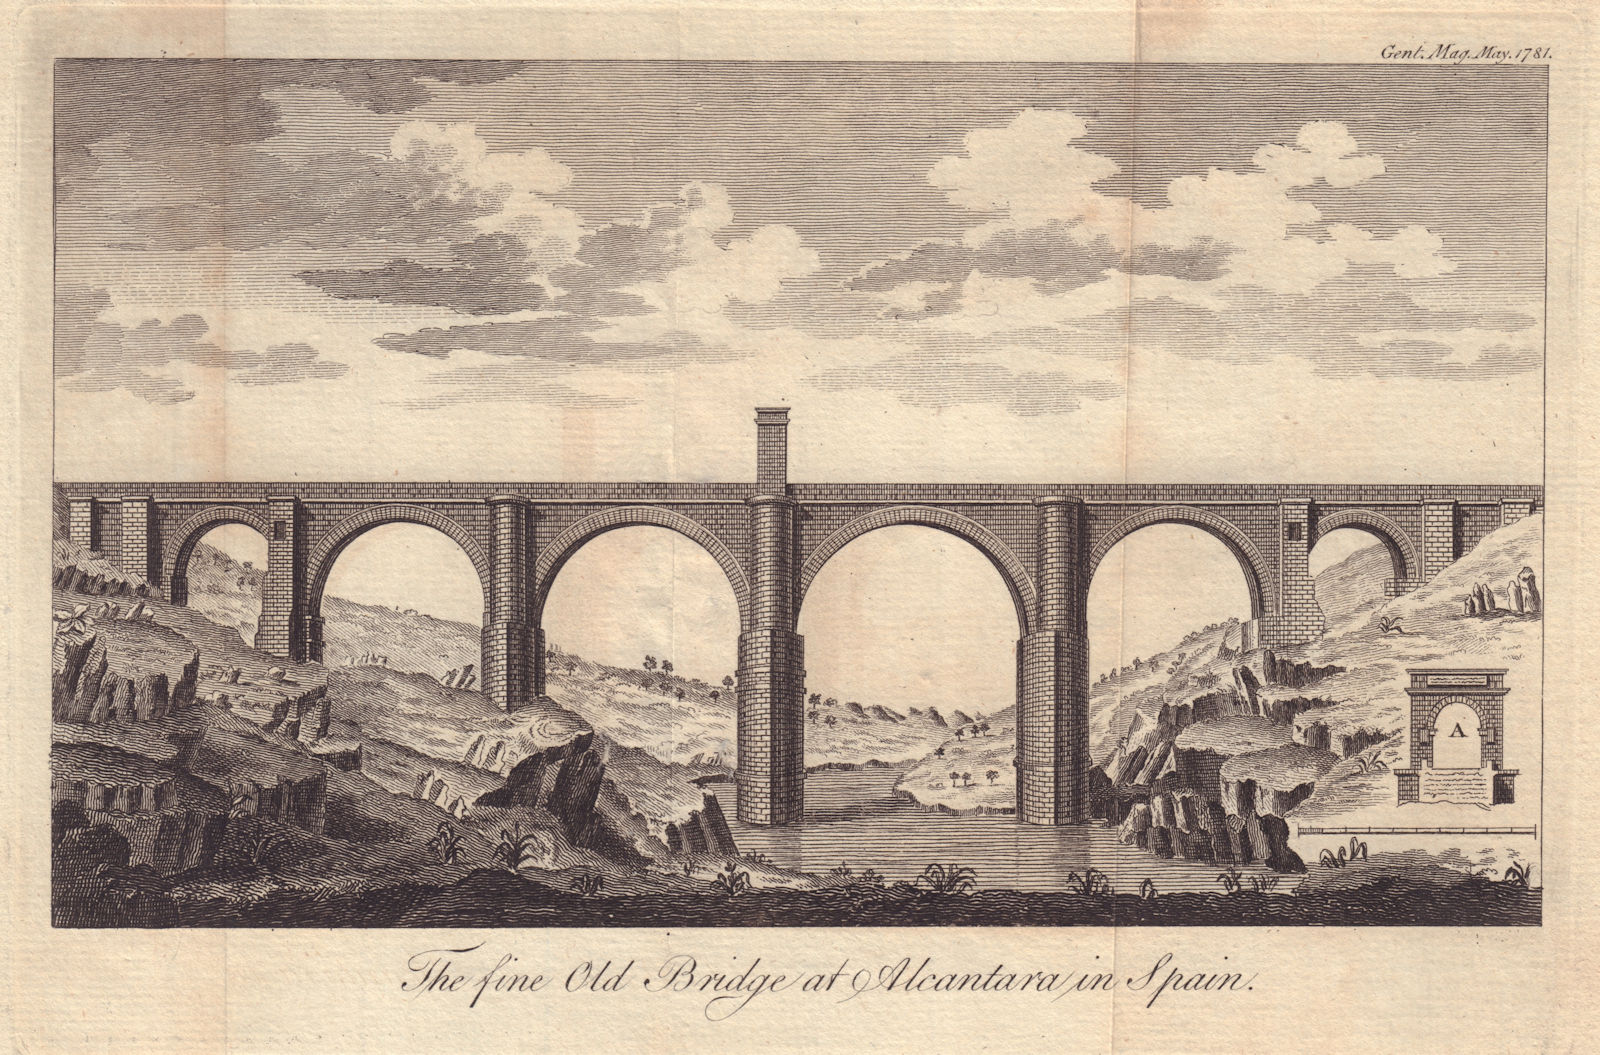 Associate Product The fine Old Bridge at Alcantara in Spain. Trajan's Roman Bridge 1781 print